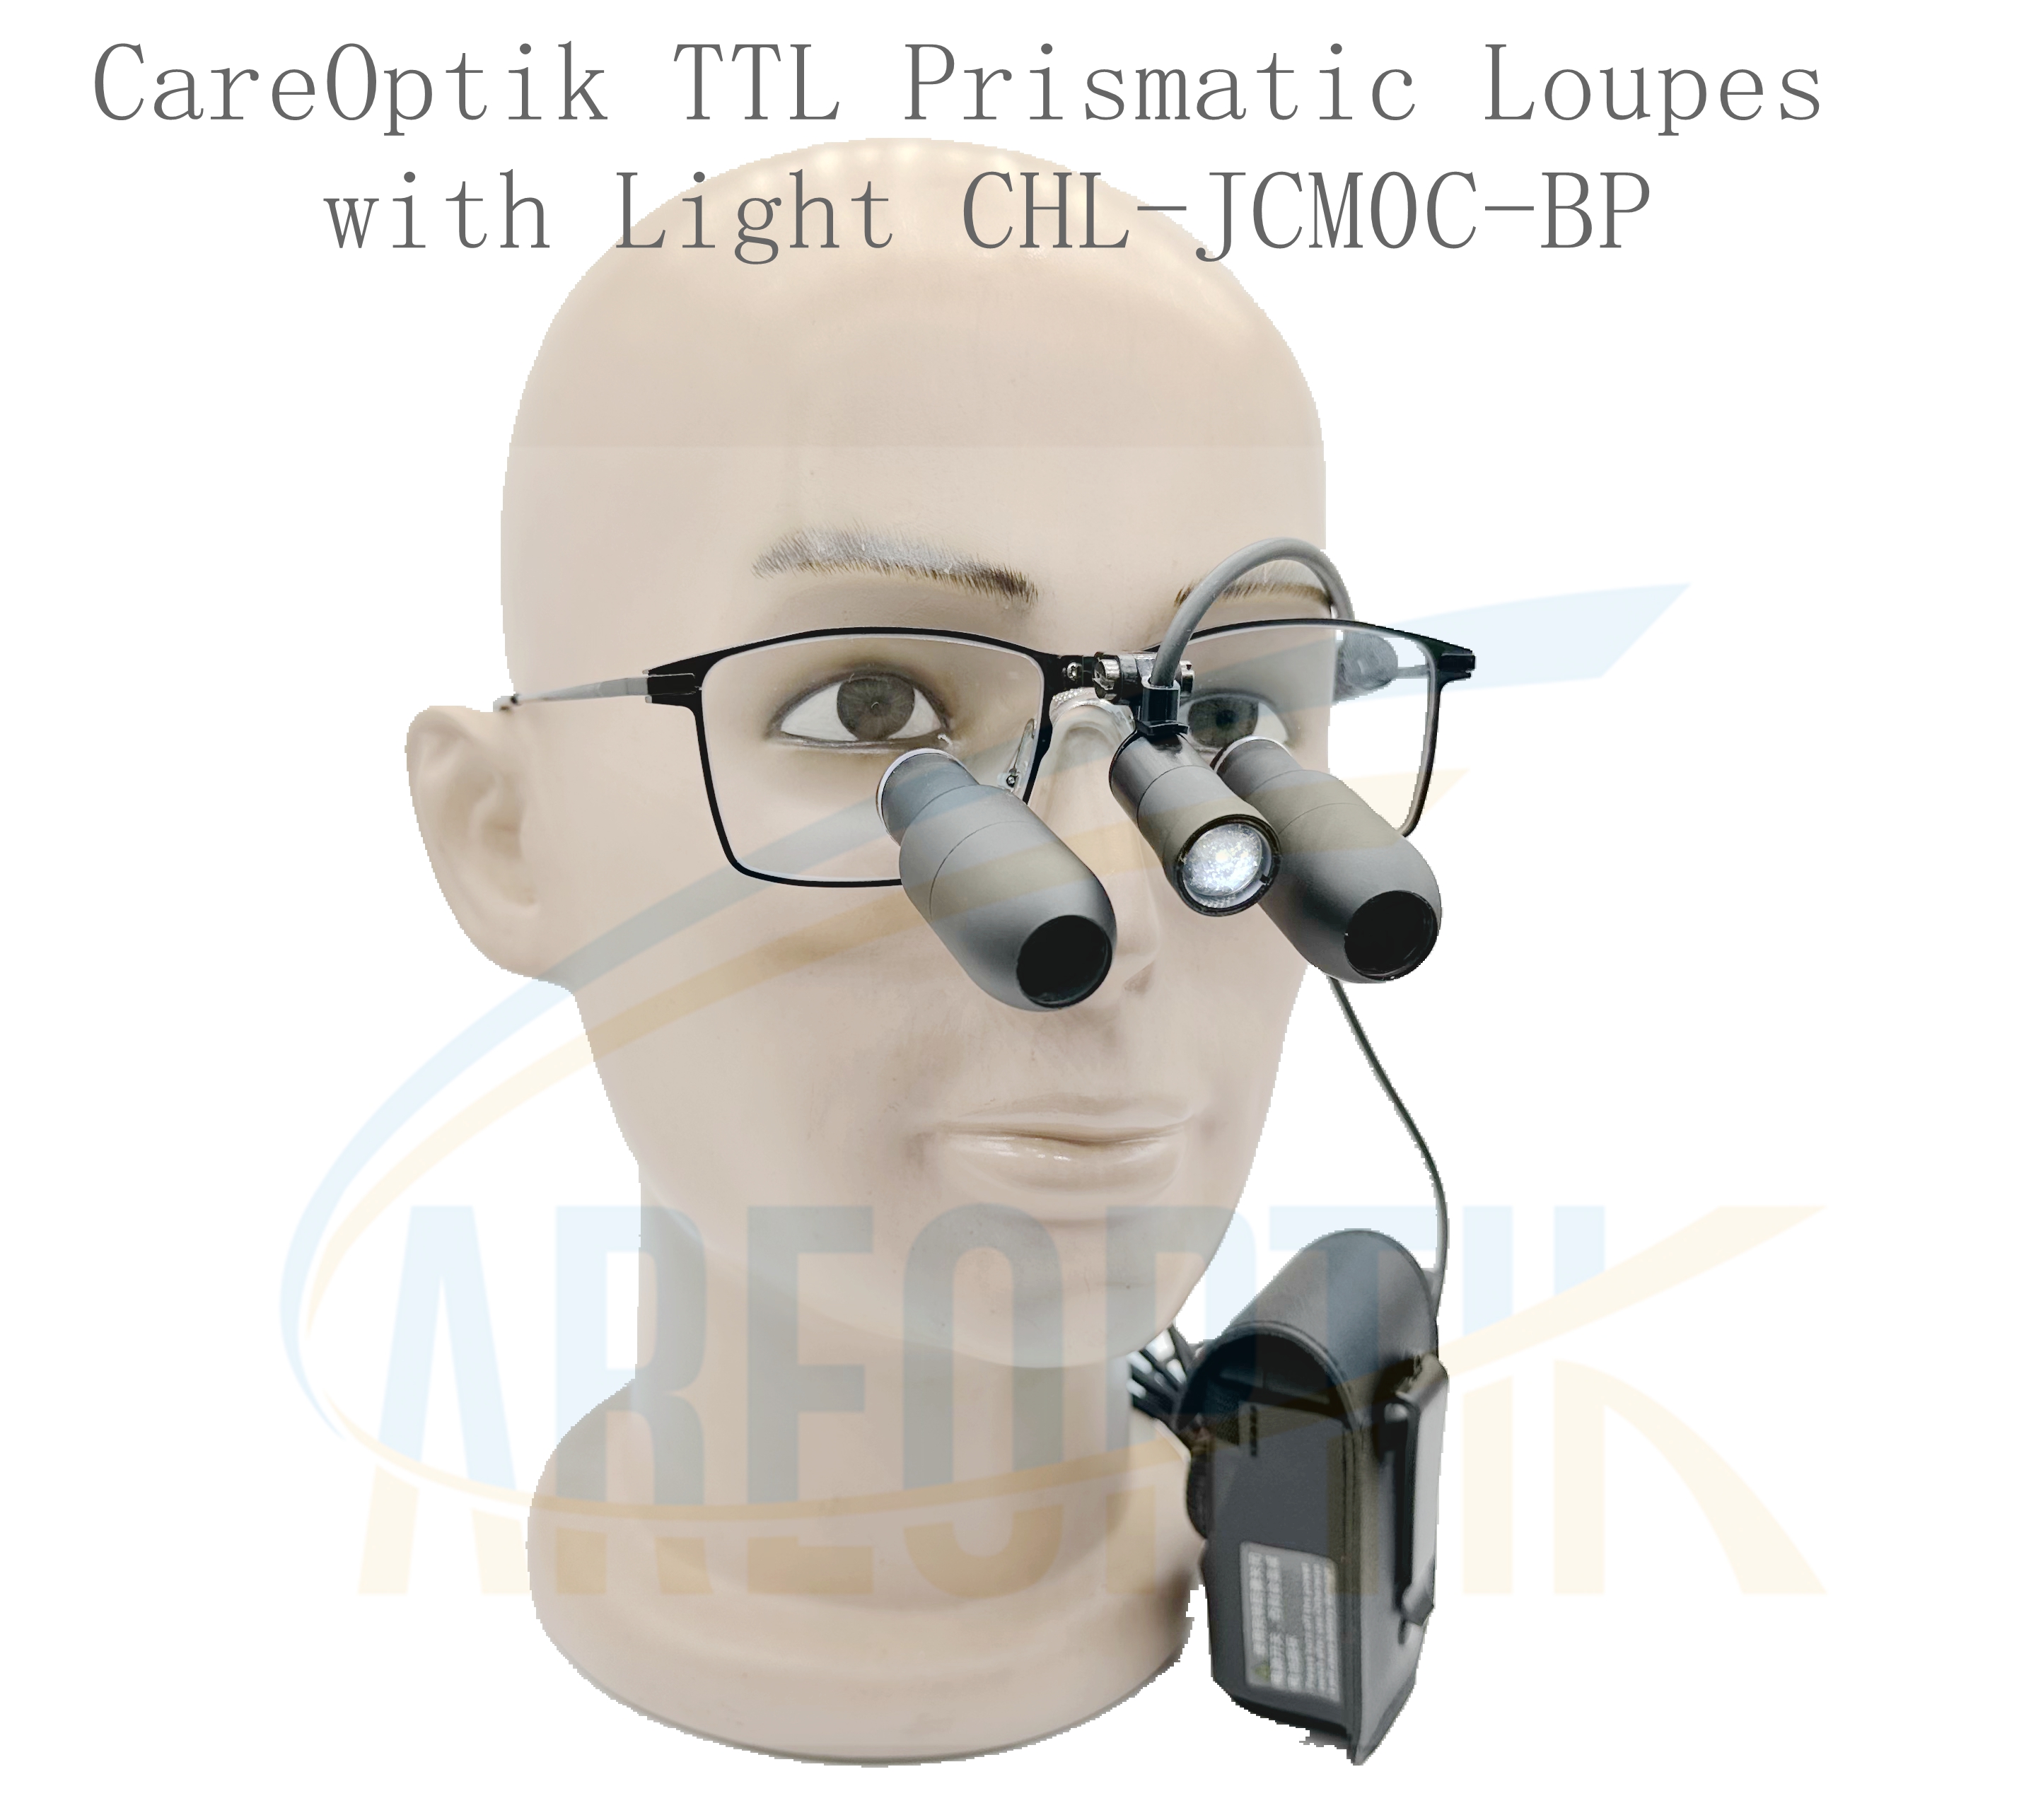 careoptik TTL prismatic dental surgical loupes with light